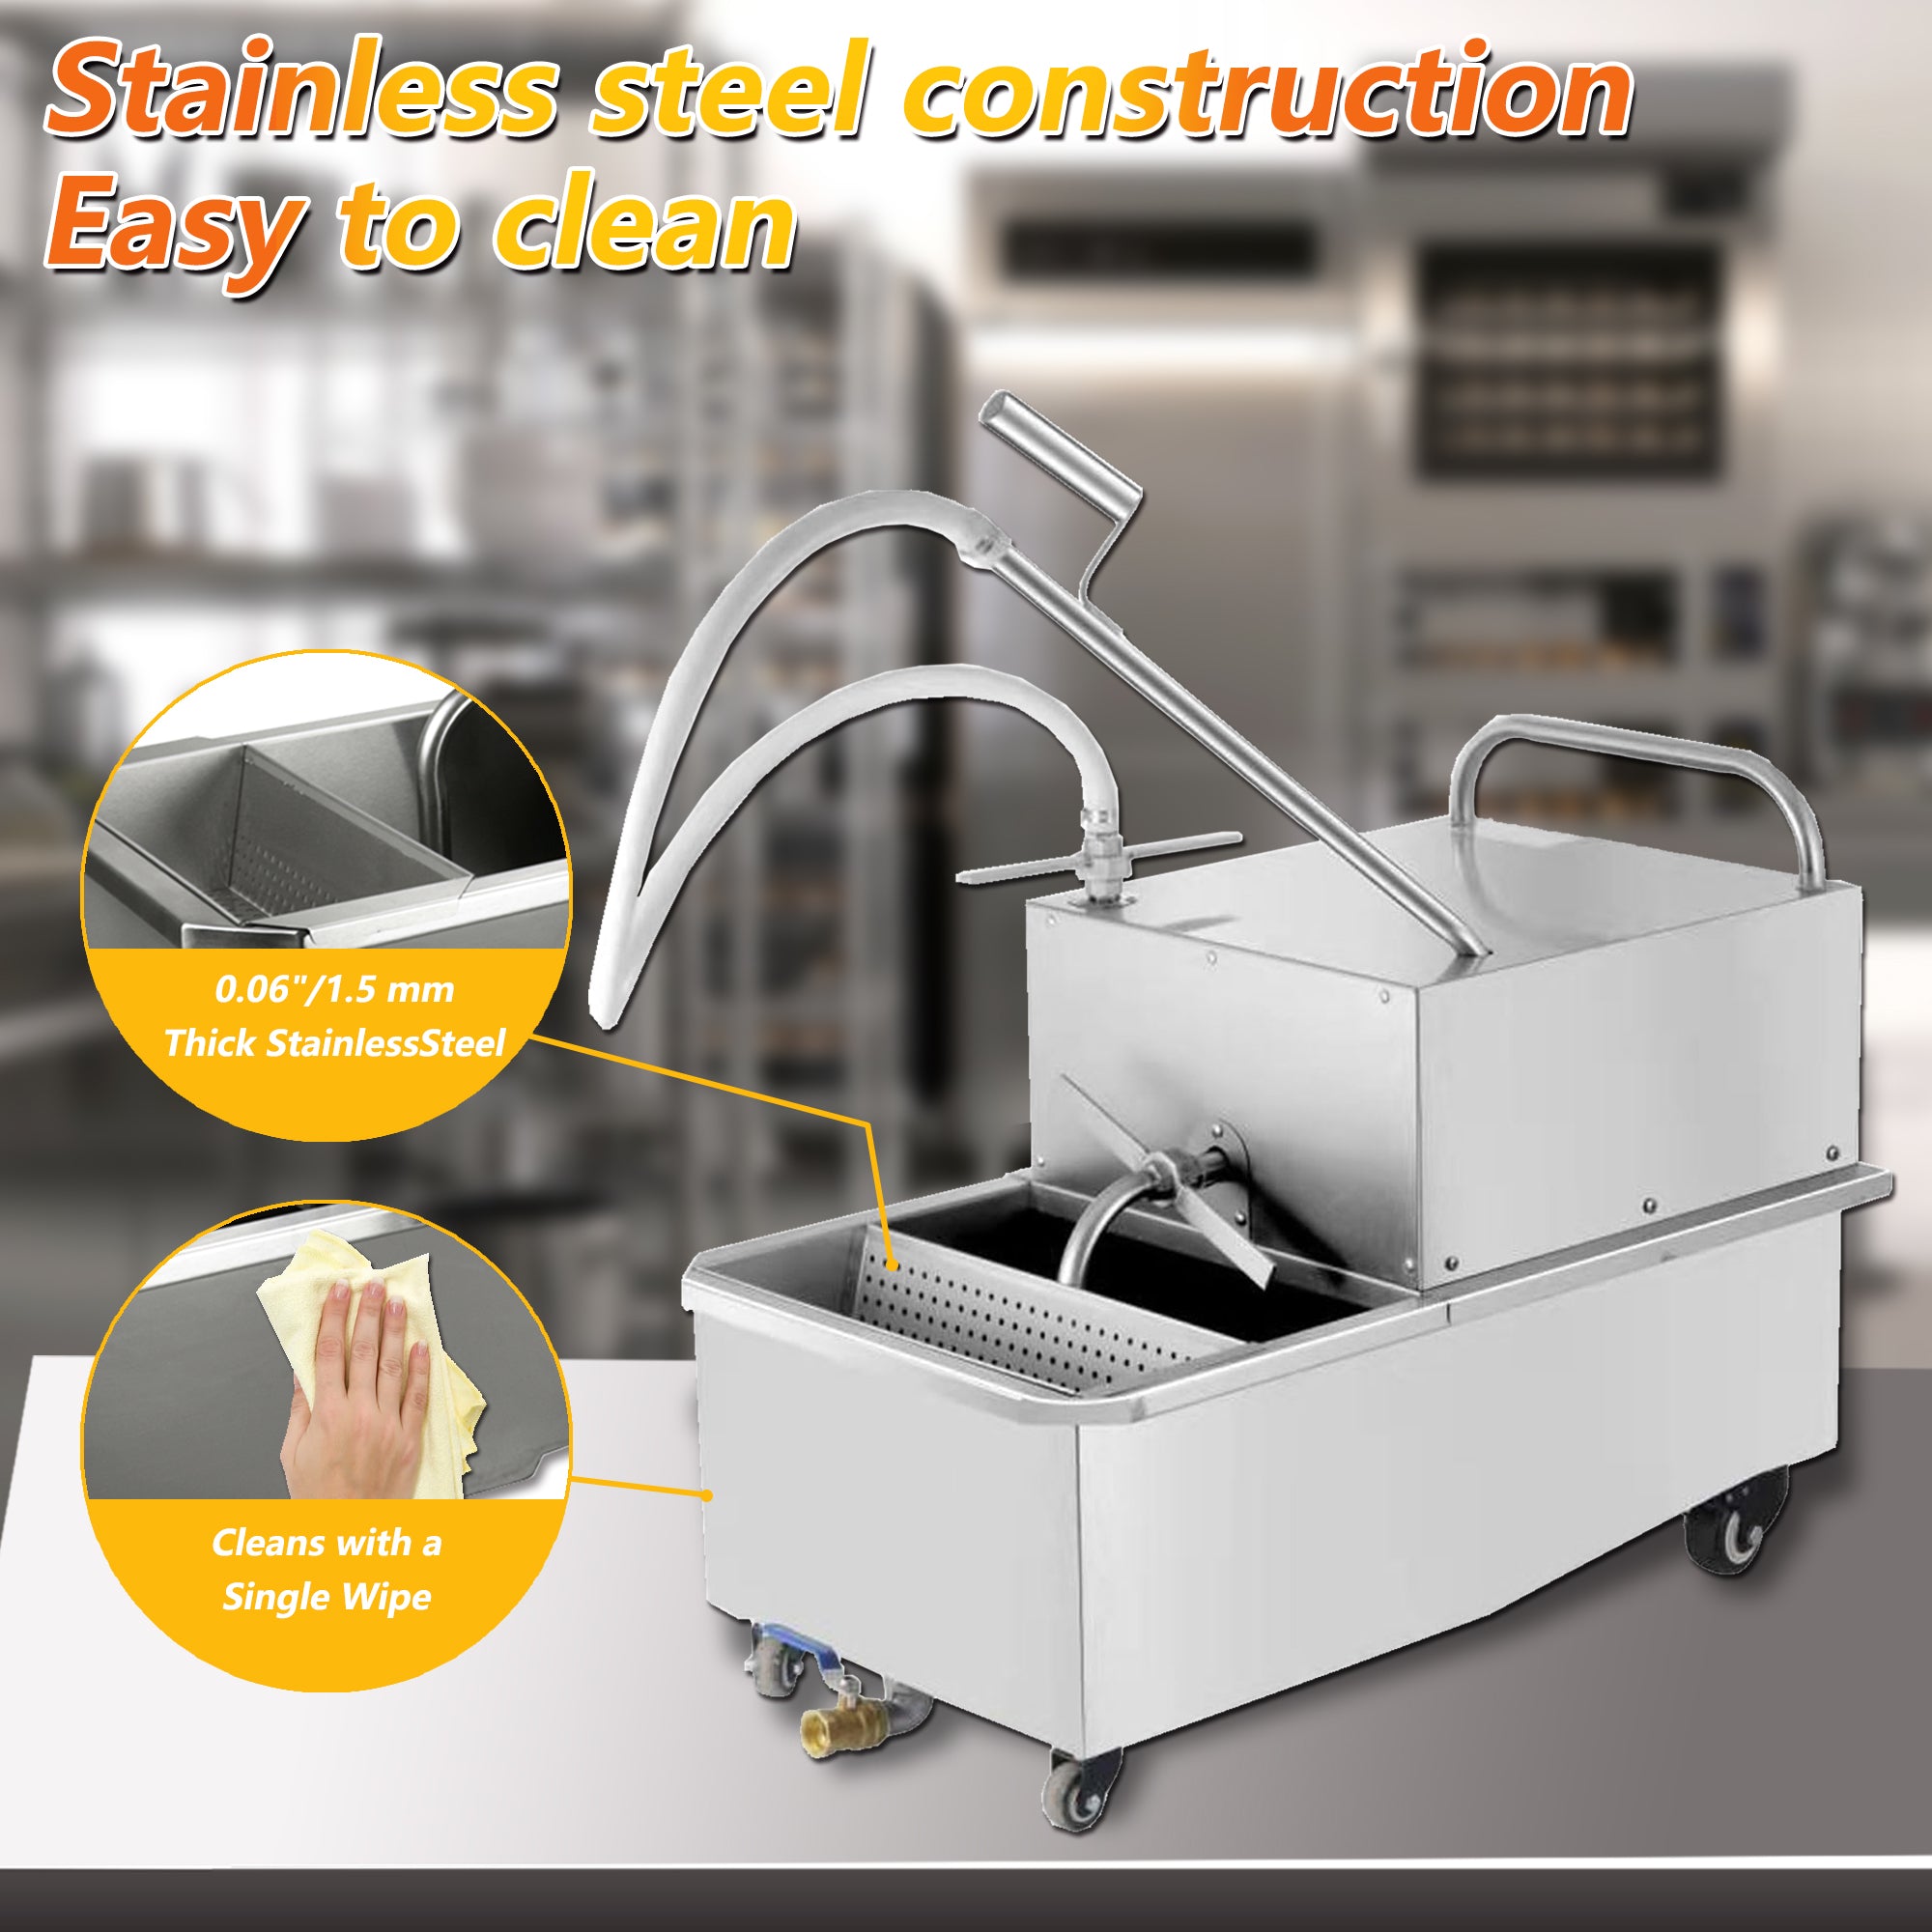 Hakka Deep Fryer Filter Machine, Commercial Mobile Oil Filter System For Restaurant, 48L, 3/4 Hp